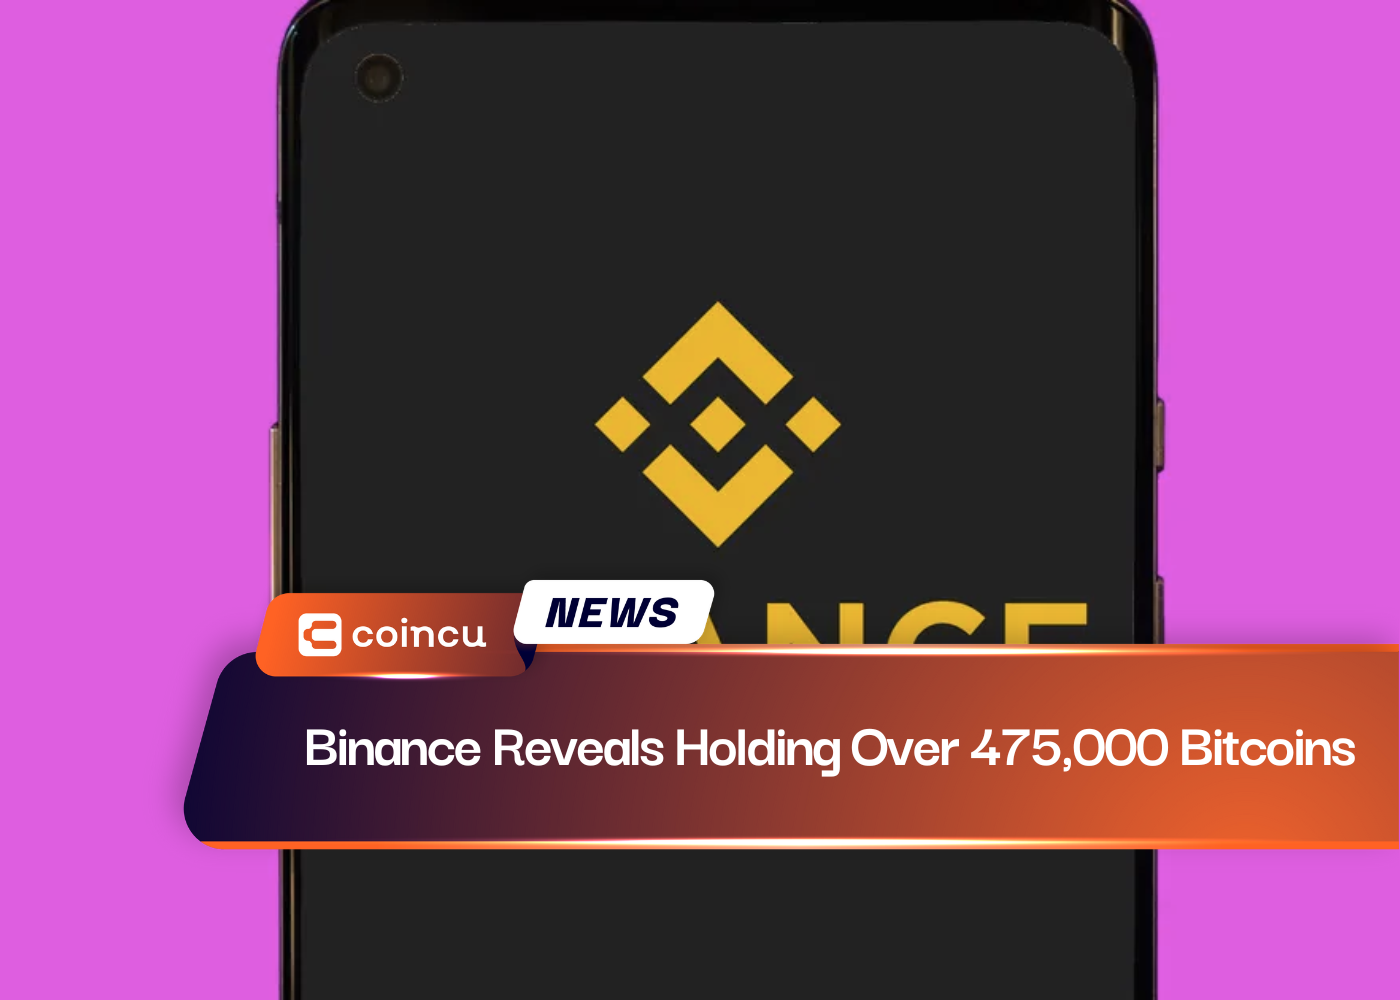 Binance Reveals Holding Over 475,000 Bitcoins